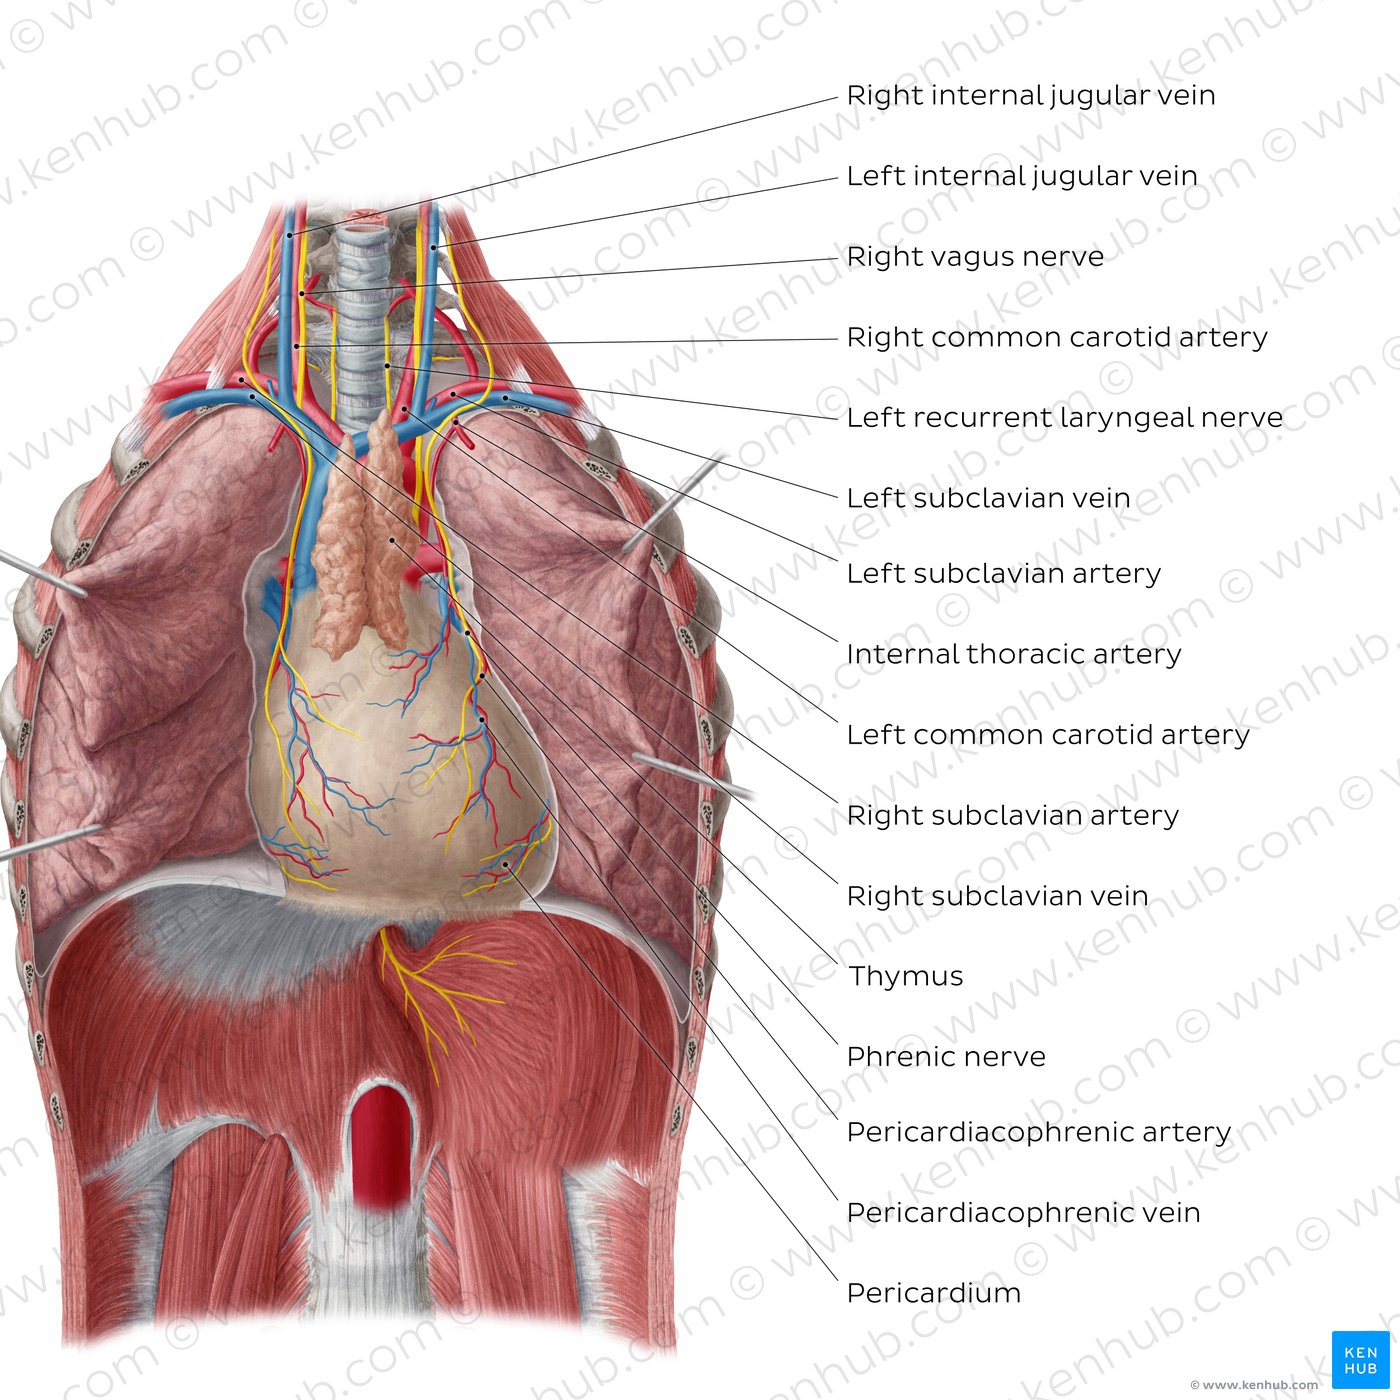 Heart in situ (anterior view)